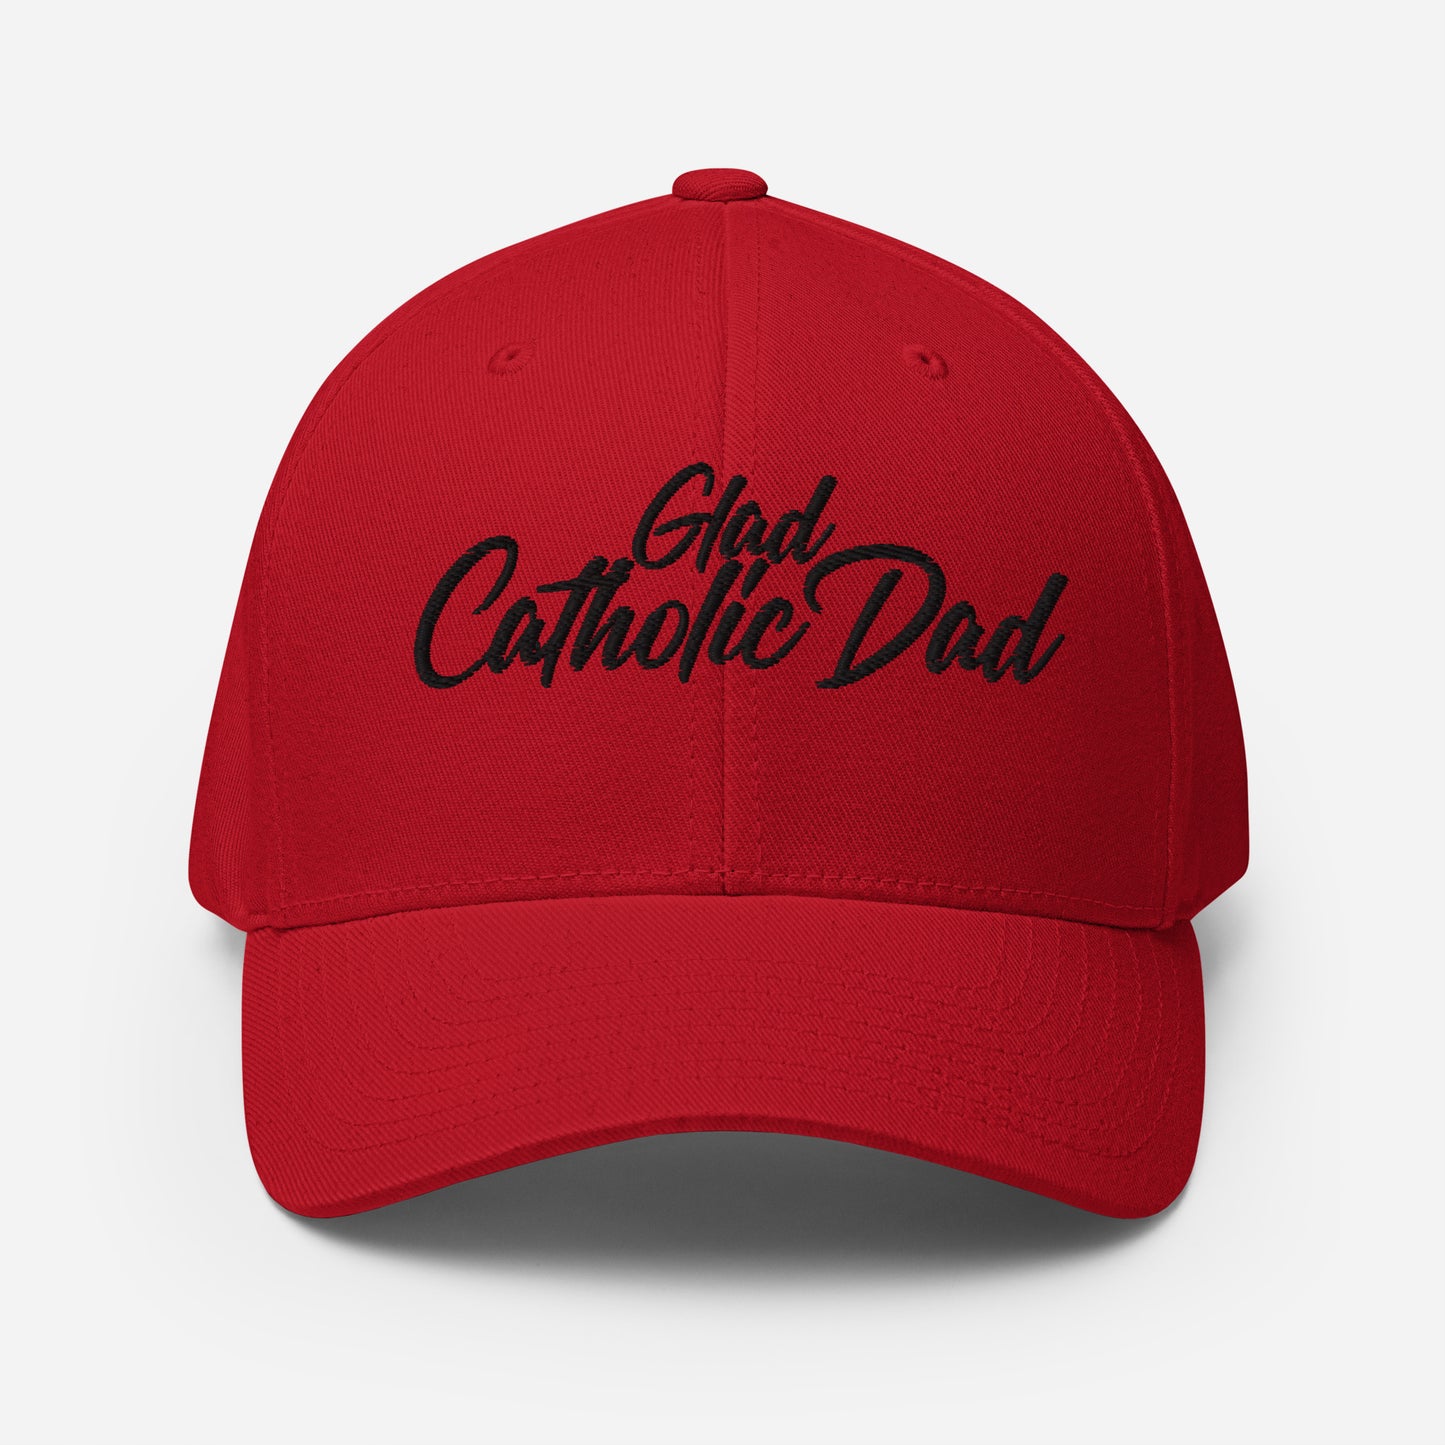 Glad Catholic Dads. - Structured Twill Cap (non-adjustable)